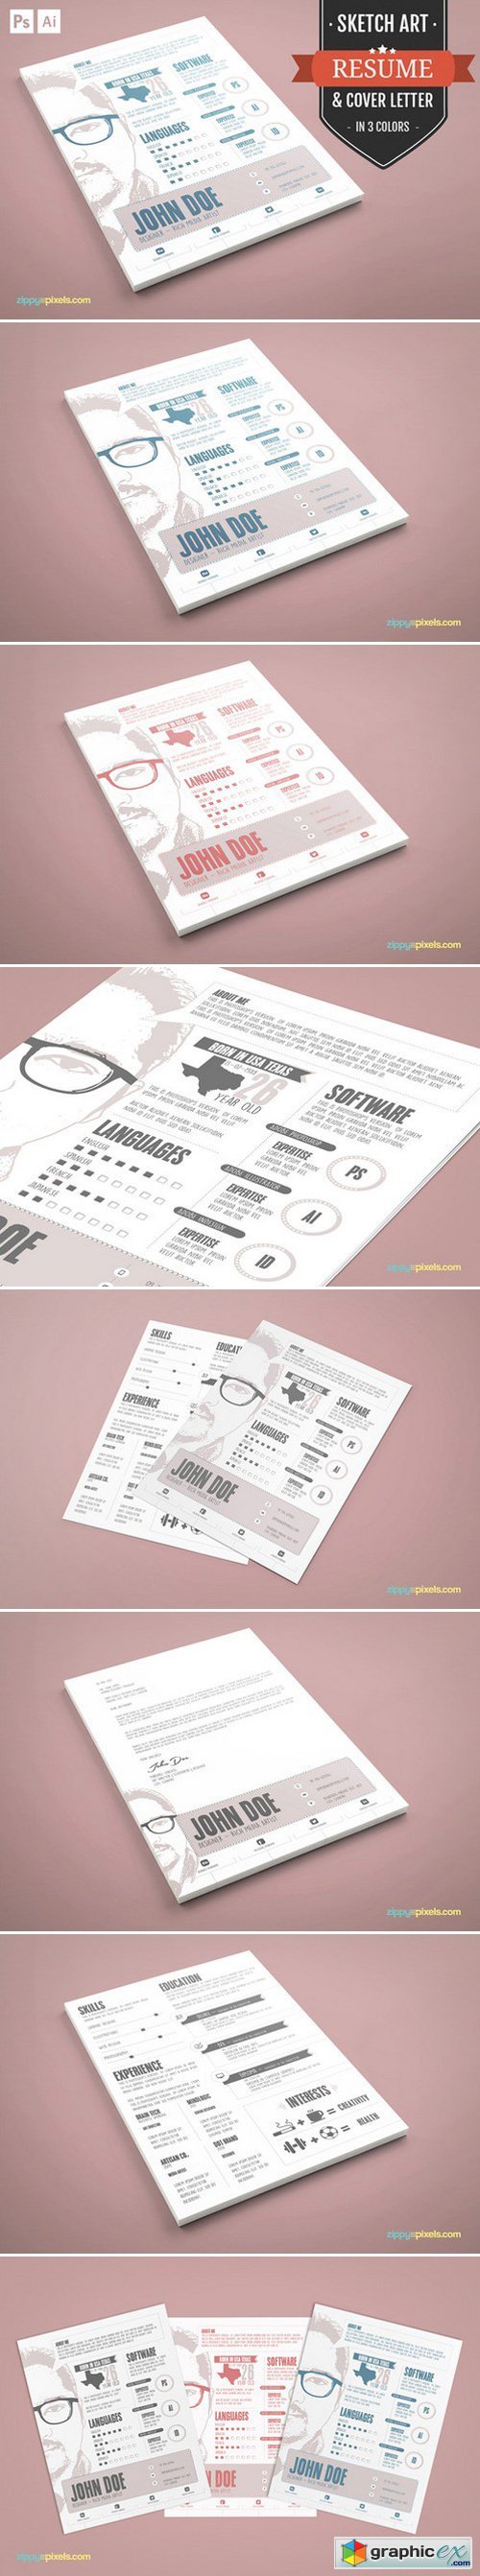 Graphic Designer Resume/CV Template